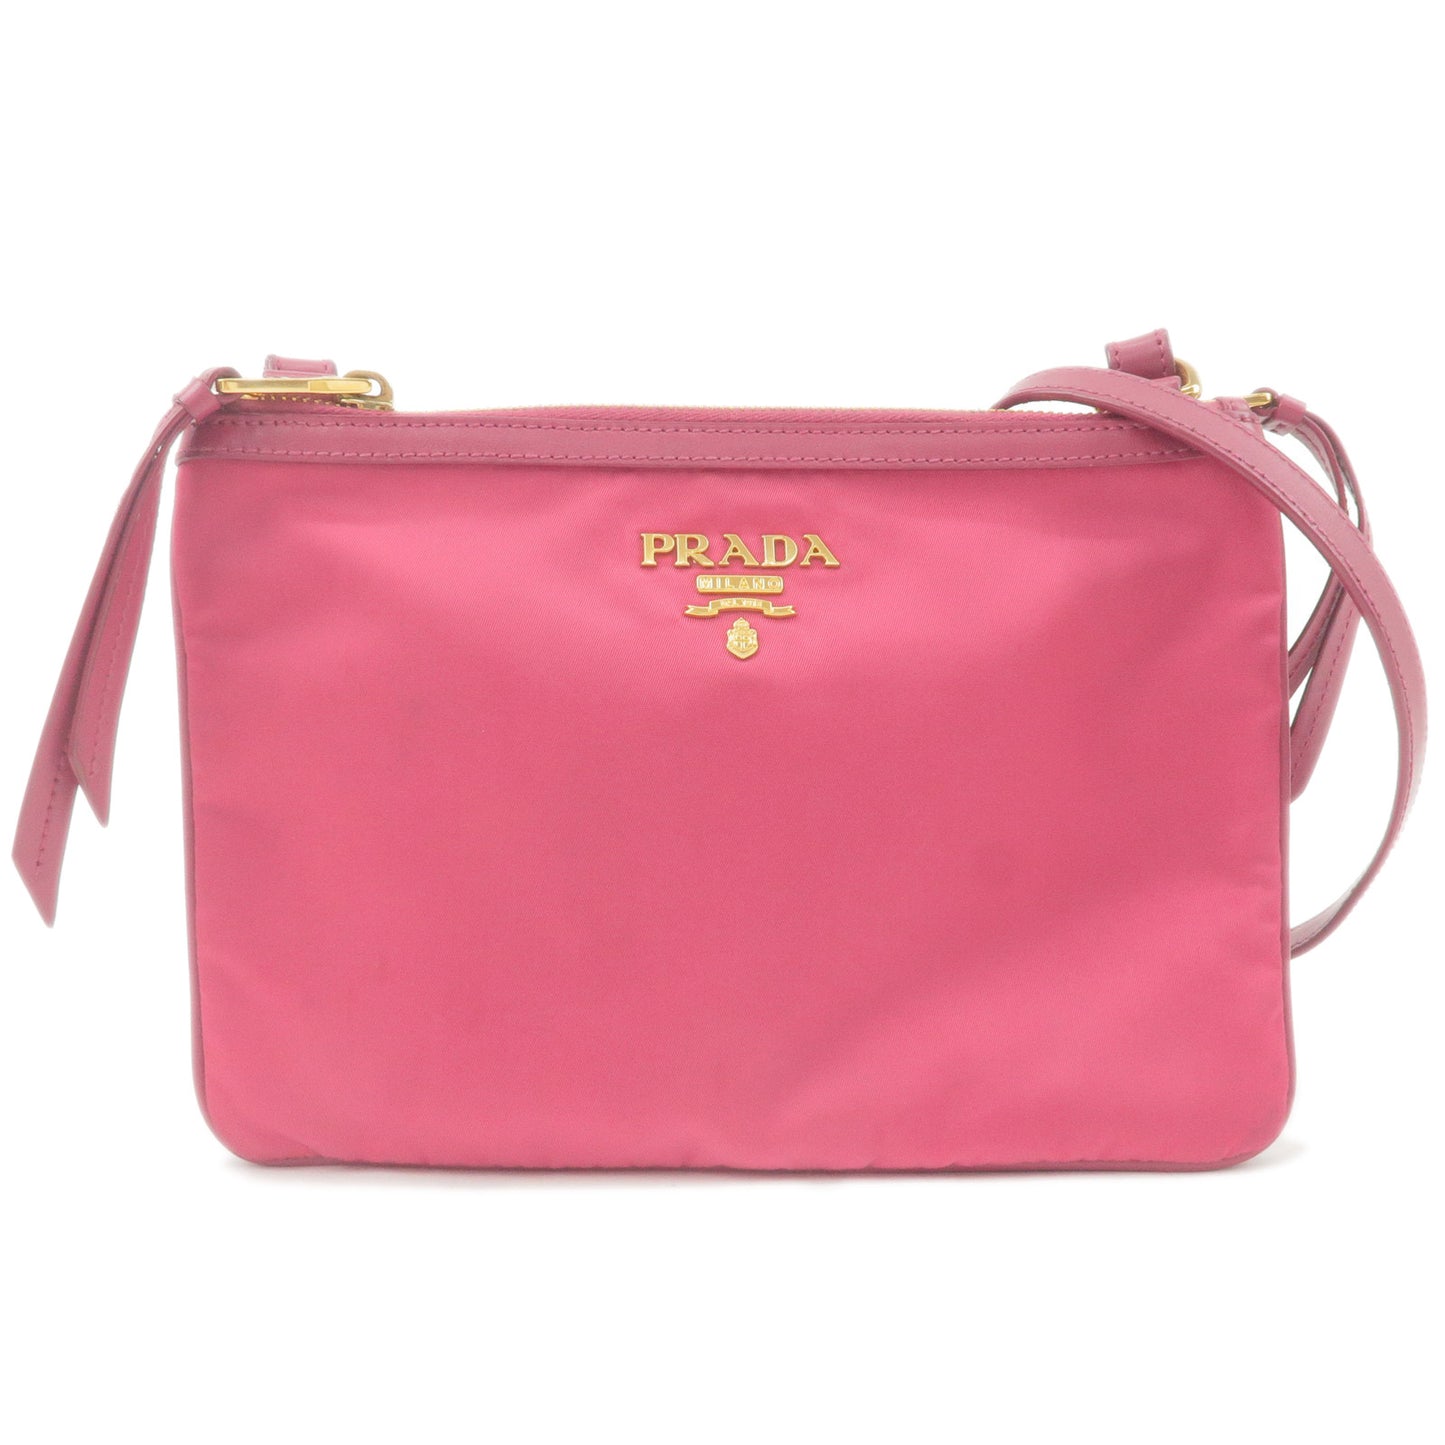 PRADA-Logo-Nylon-Leather-Shoulder-Bag-Pink-1BH046